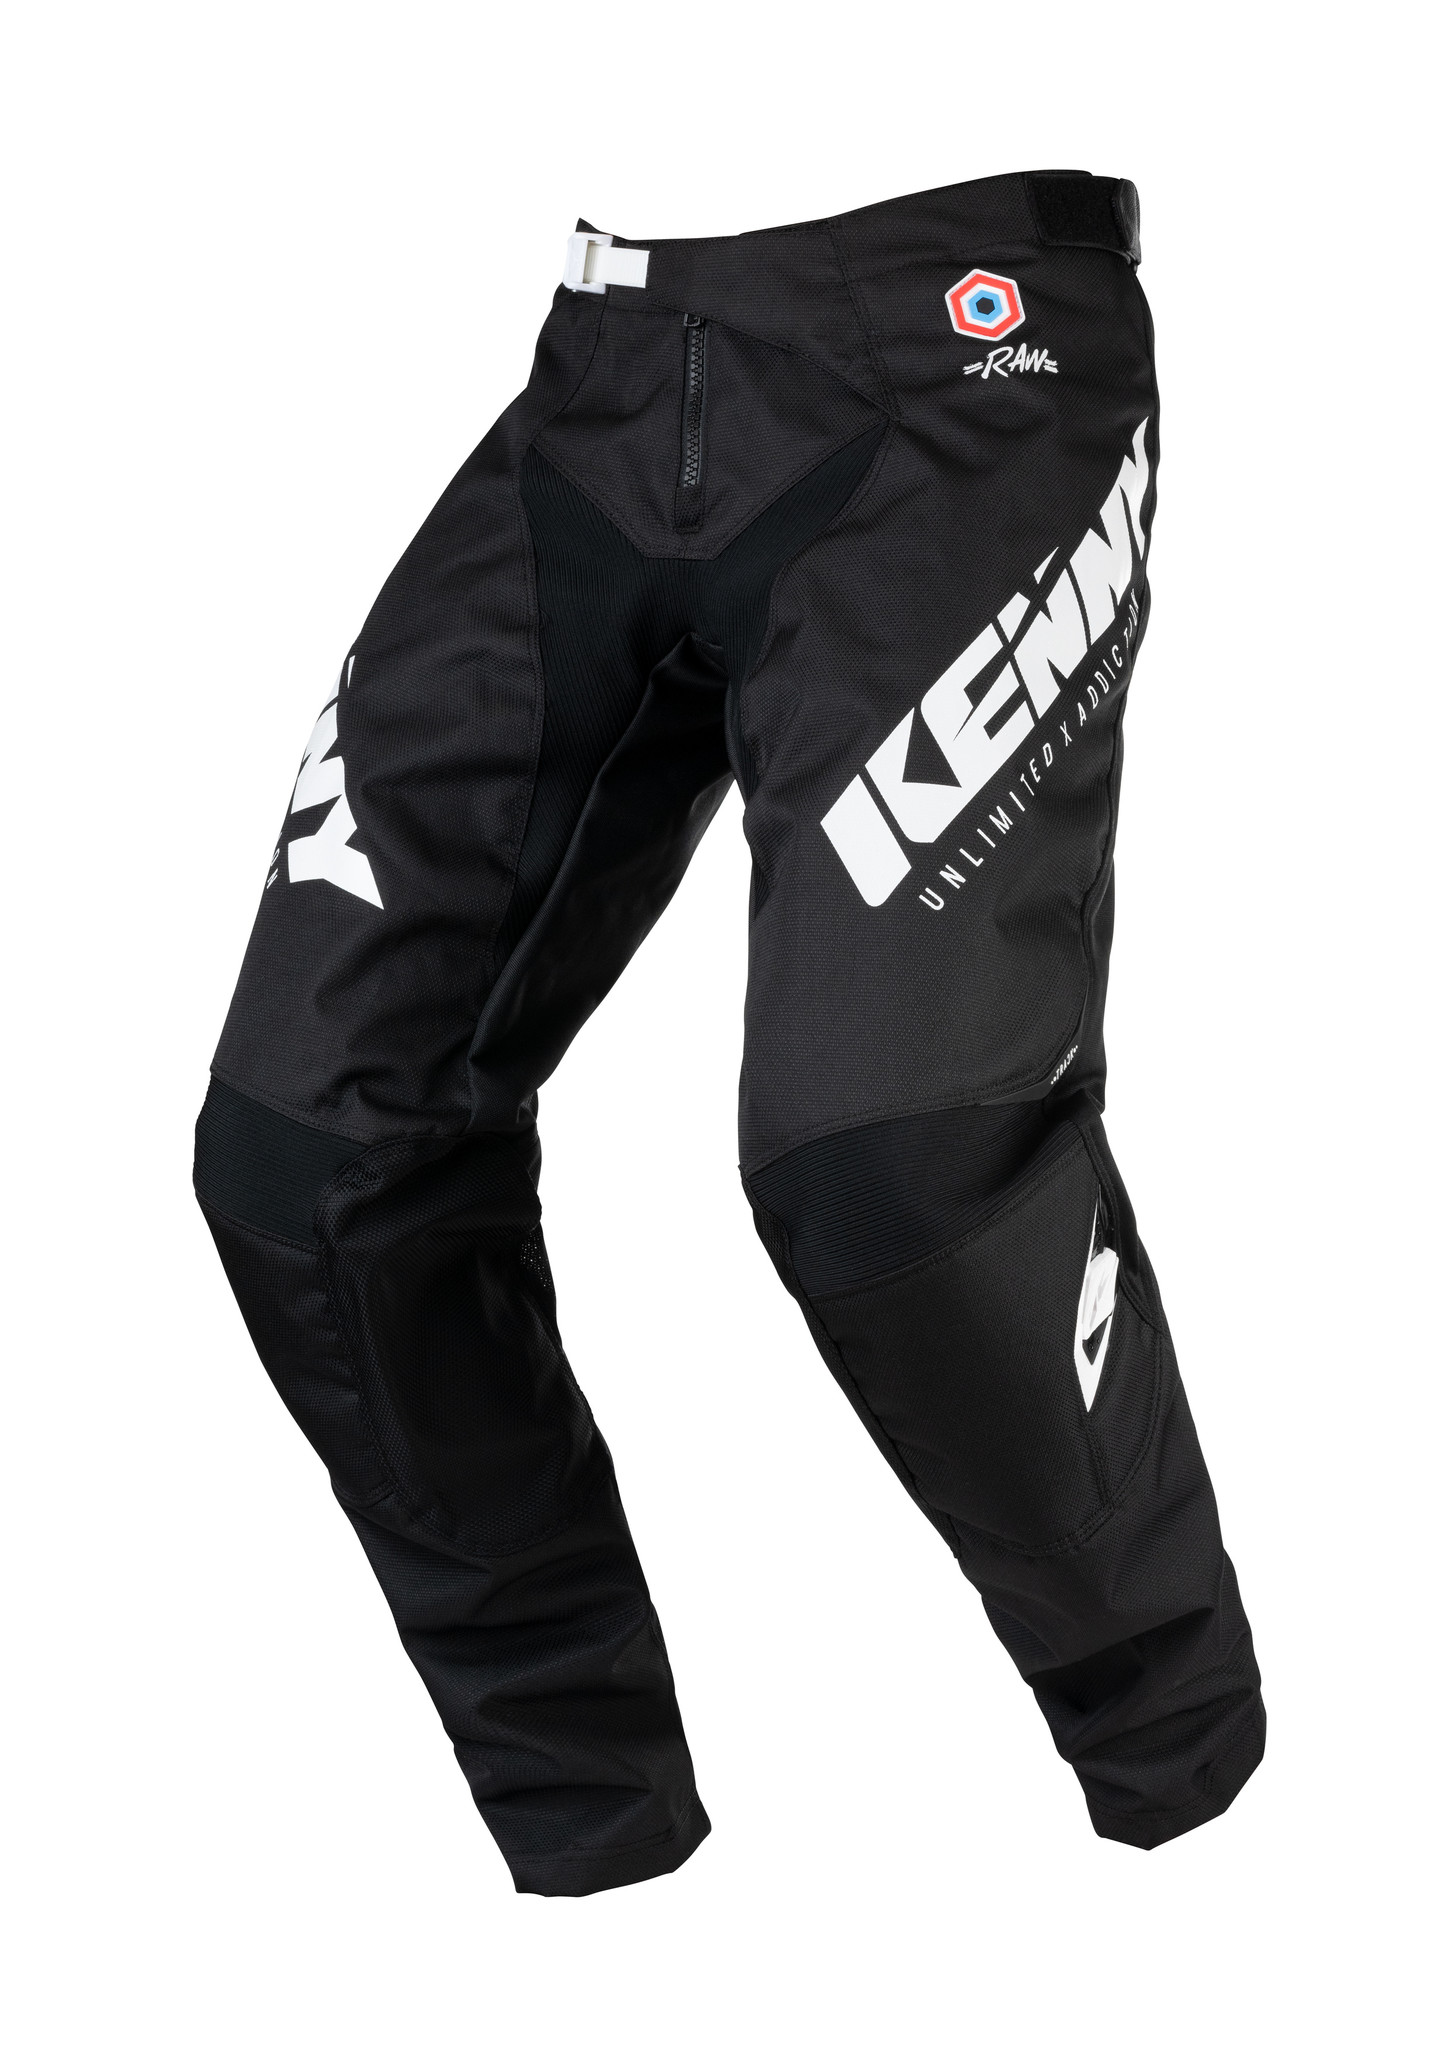 segment scheuren huid Kenny BMX Raw Track Pants Black White 2021 | Verlu BMX & Parts